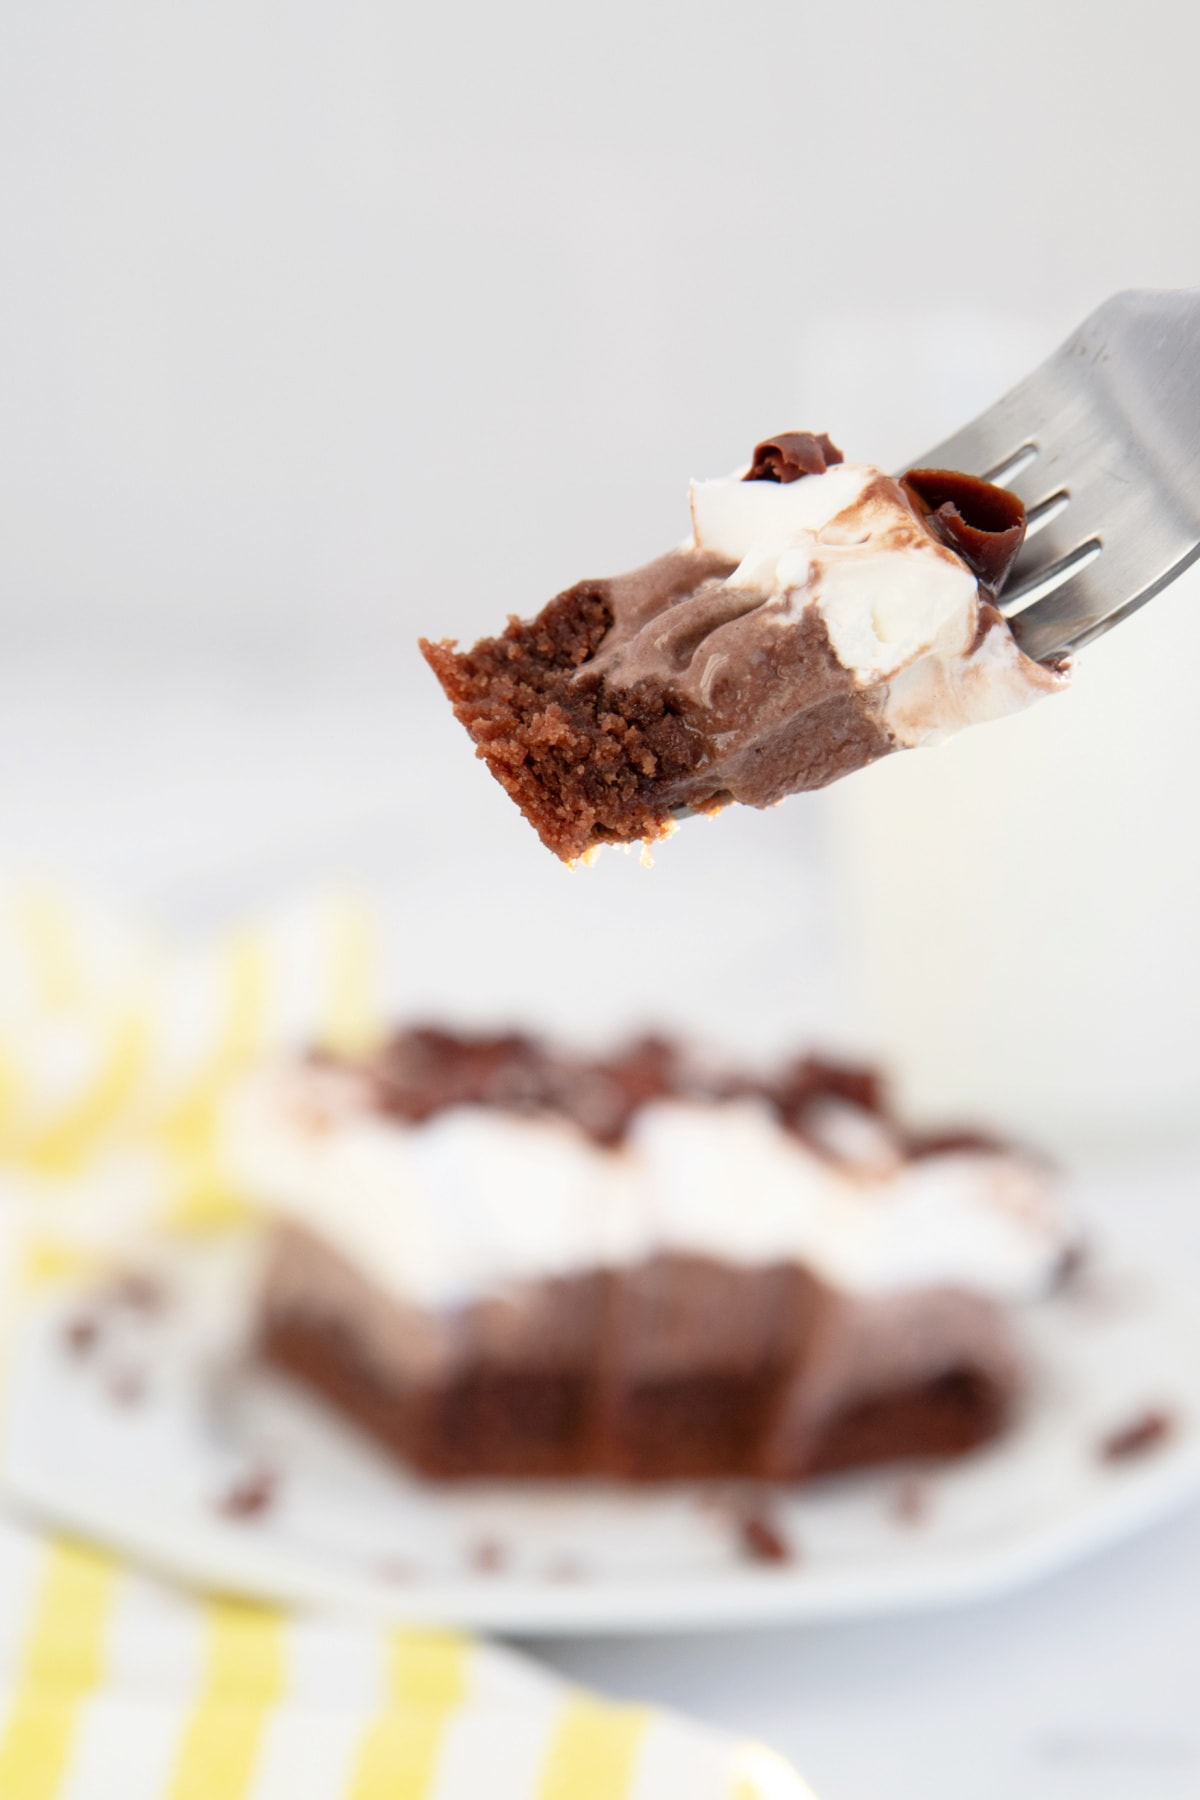 Bite of brownie ice cream cake on fork